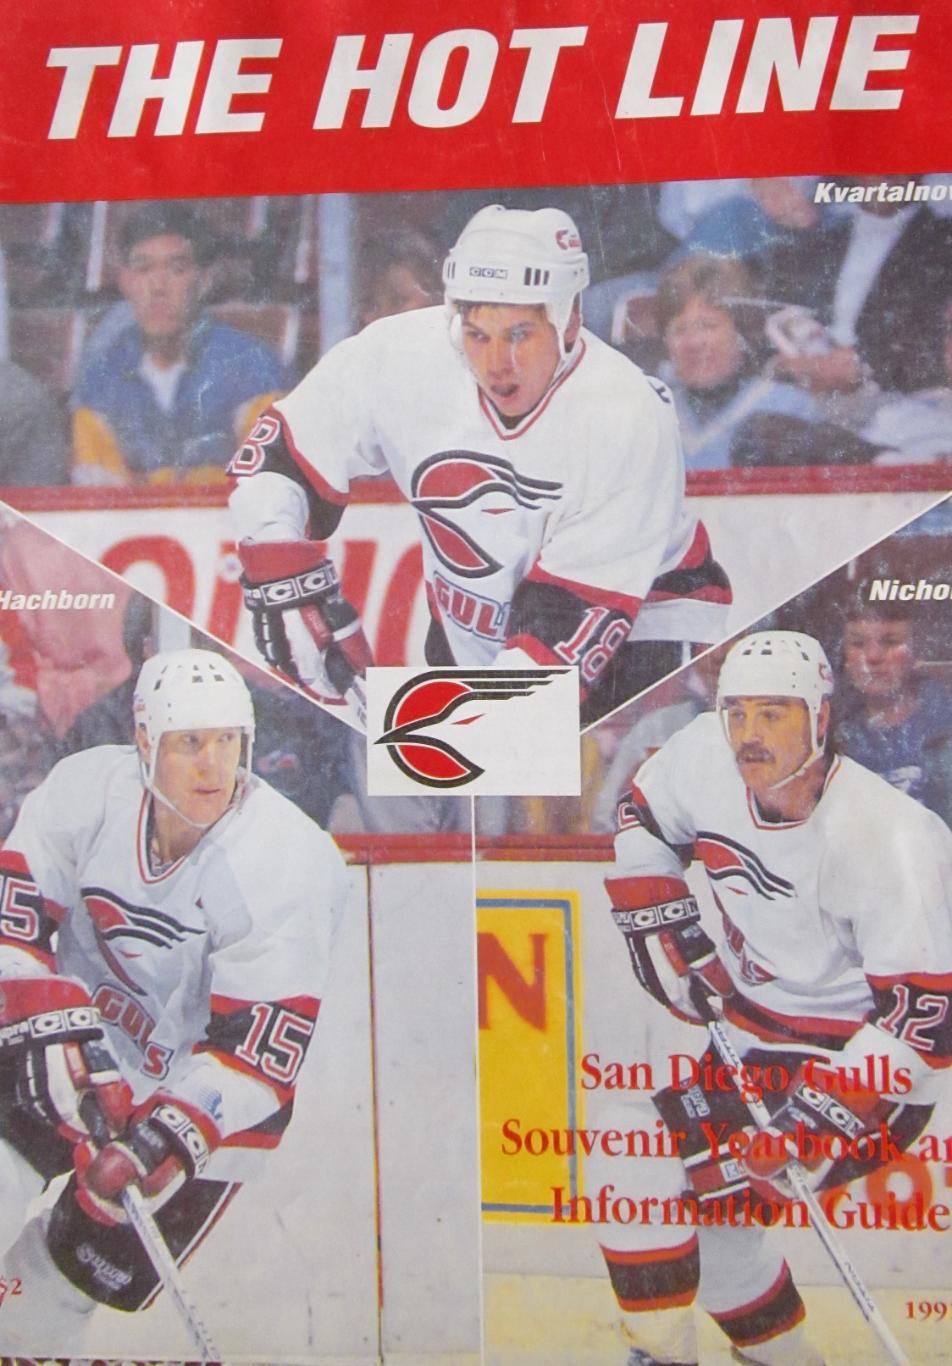 ХОККЕЙ. San Diego Gulls США. 1991-92 гг. IHL(Интернациональная хоккейная лига)